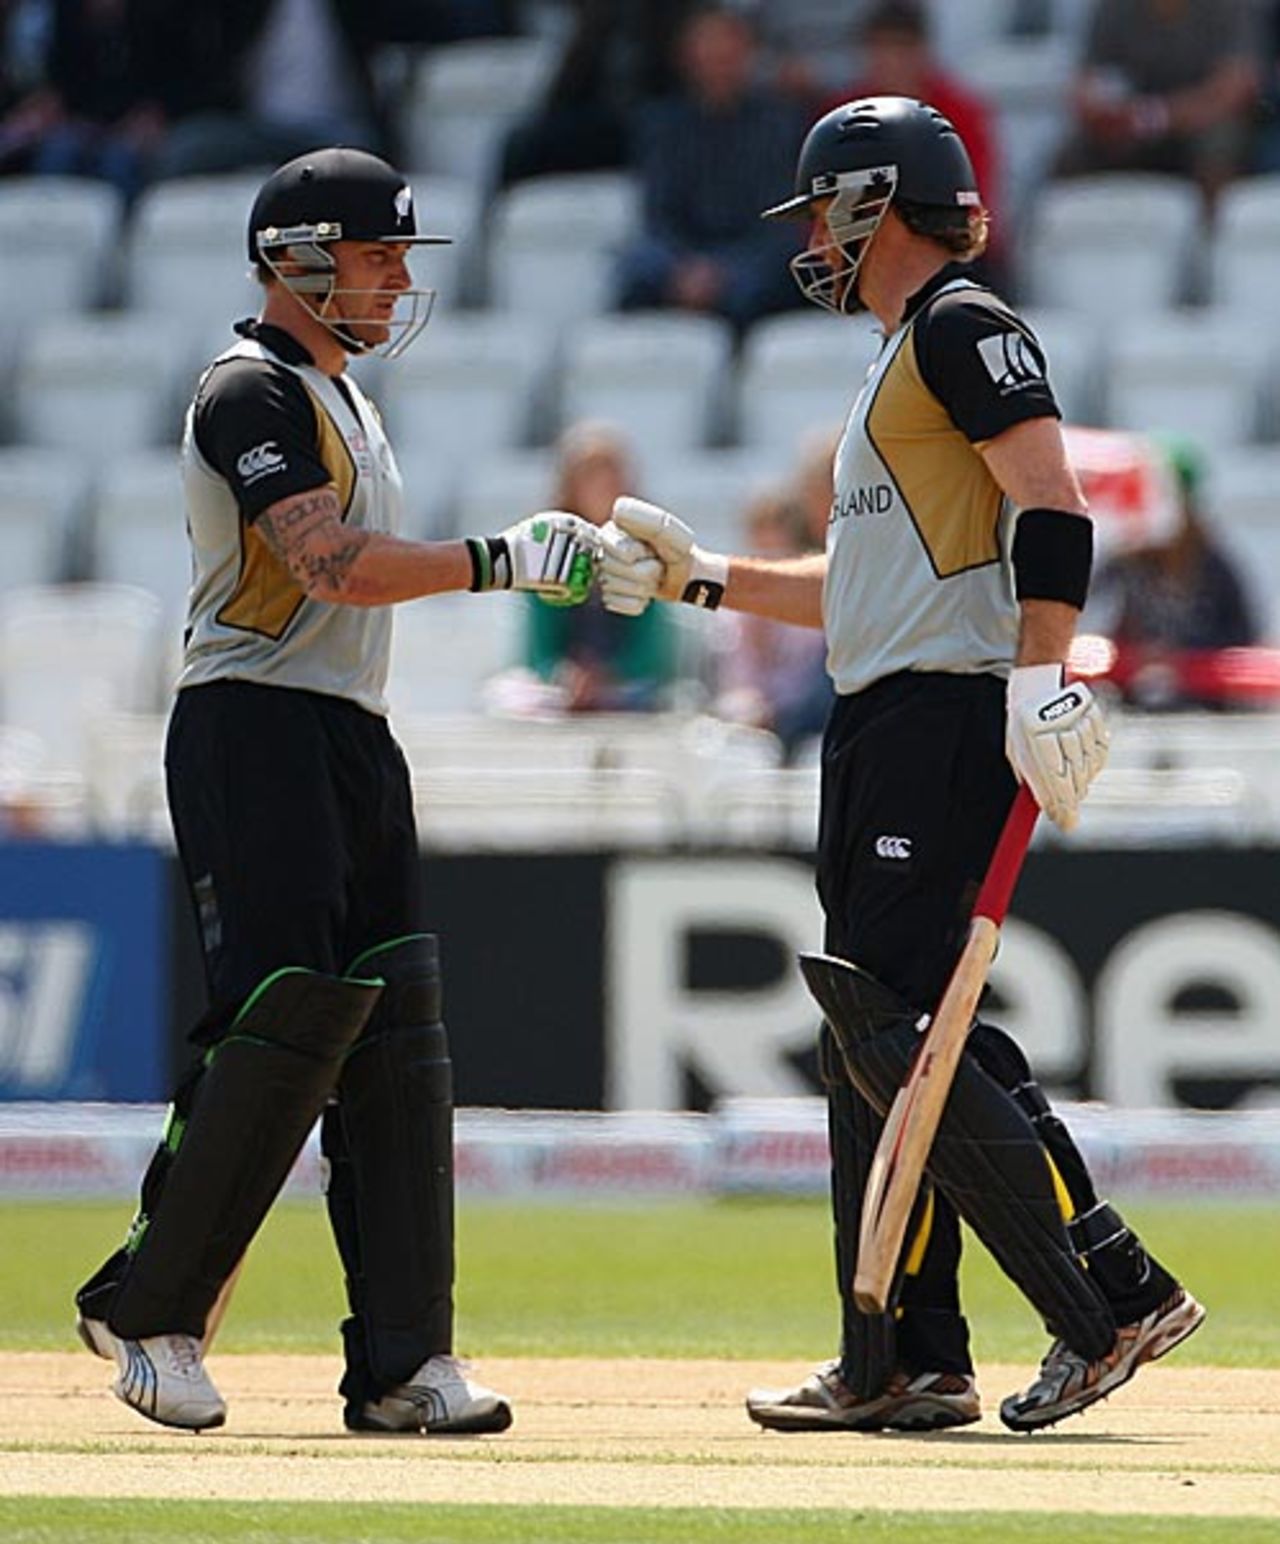 Brendon McCullum and Aaron Redmond added 51 for the first wicket, Ireland v New Zealand, ICC World Twenty20 Super Eights, Trent Bridge, June 11, 2009